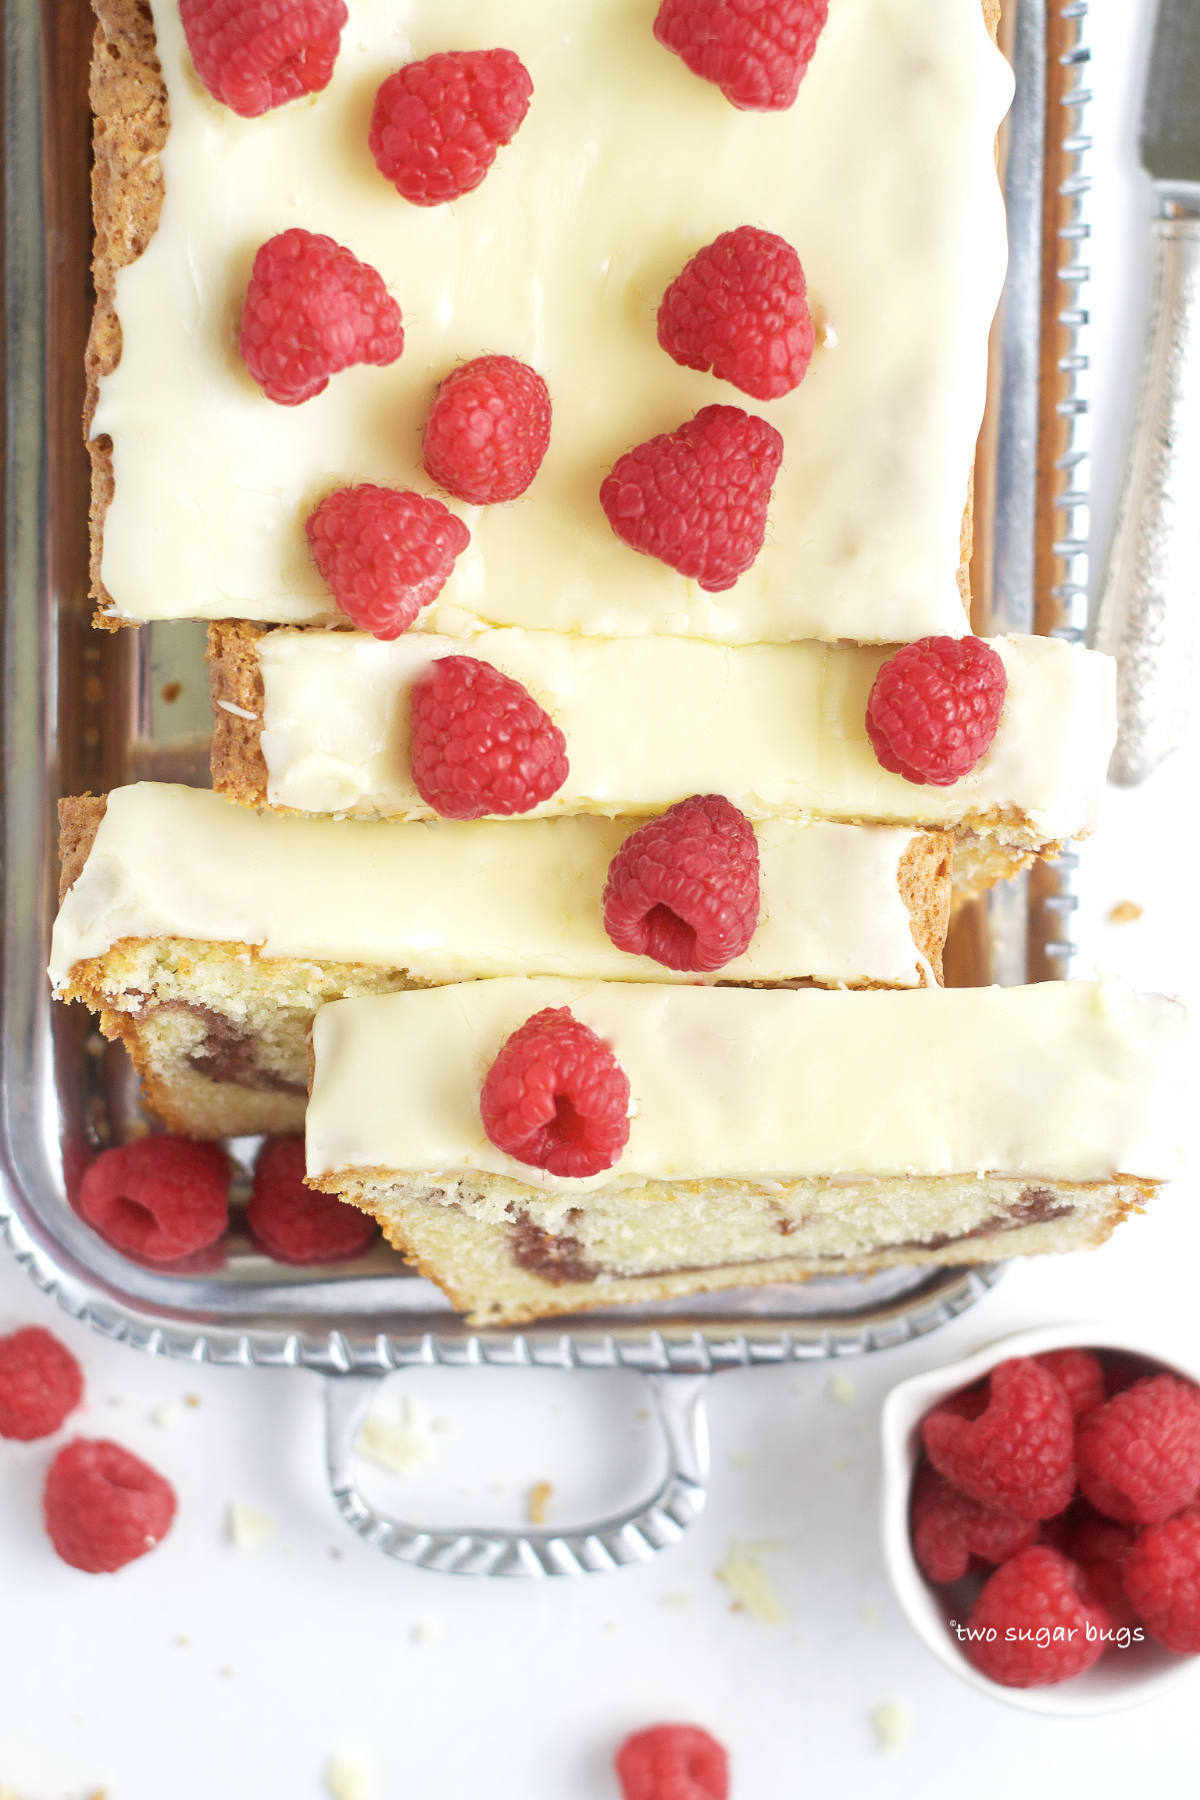 white chocolate ganache icing and fresh raspberries on top of cake